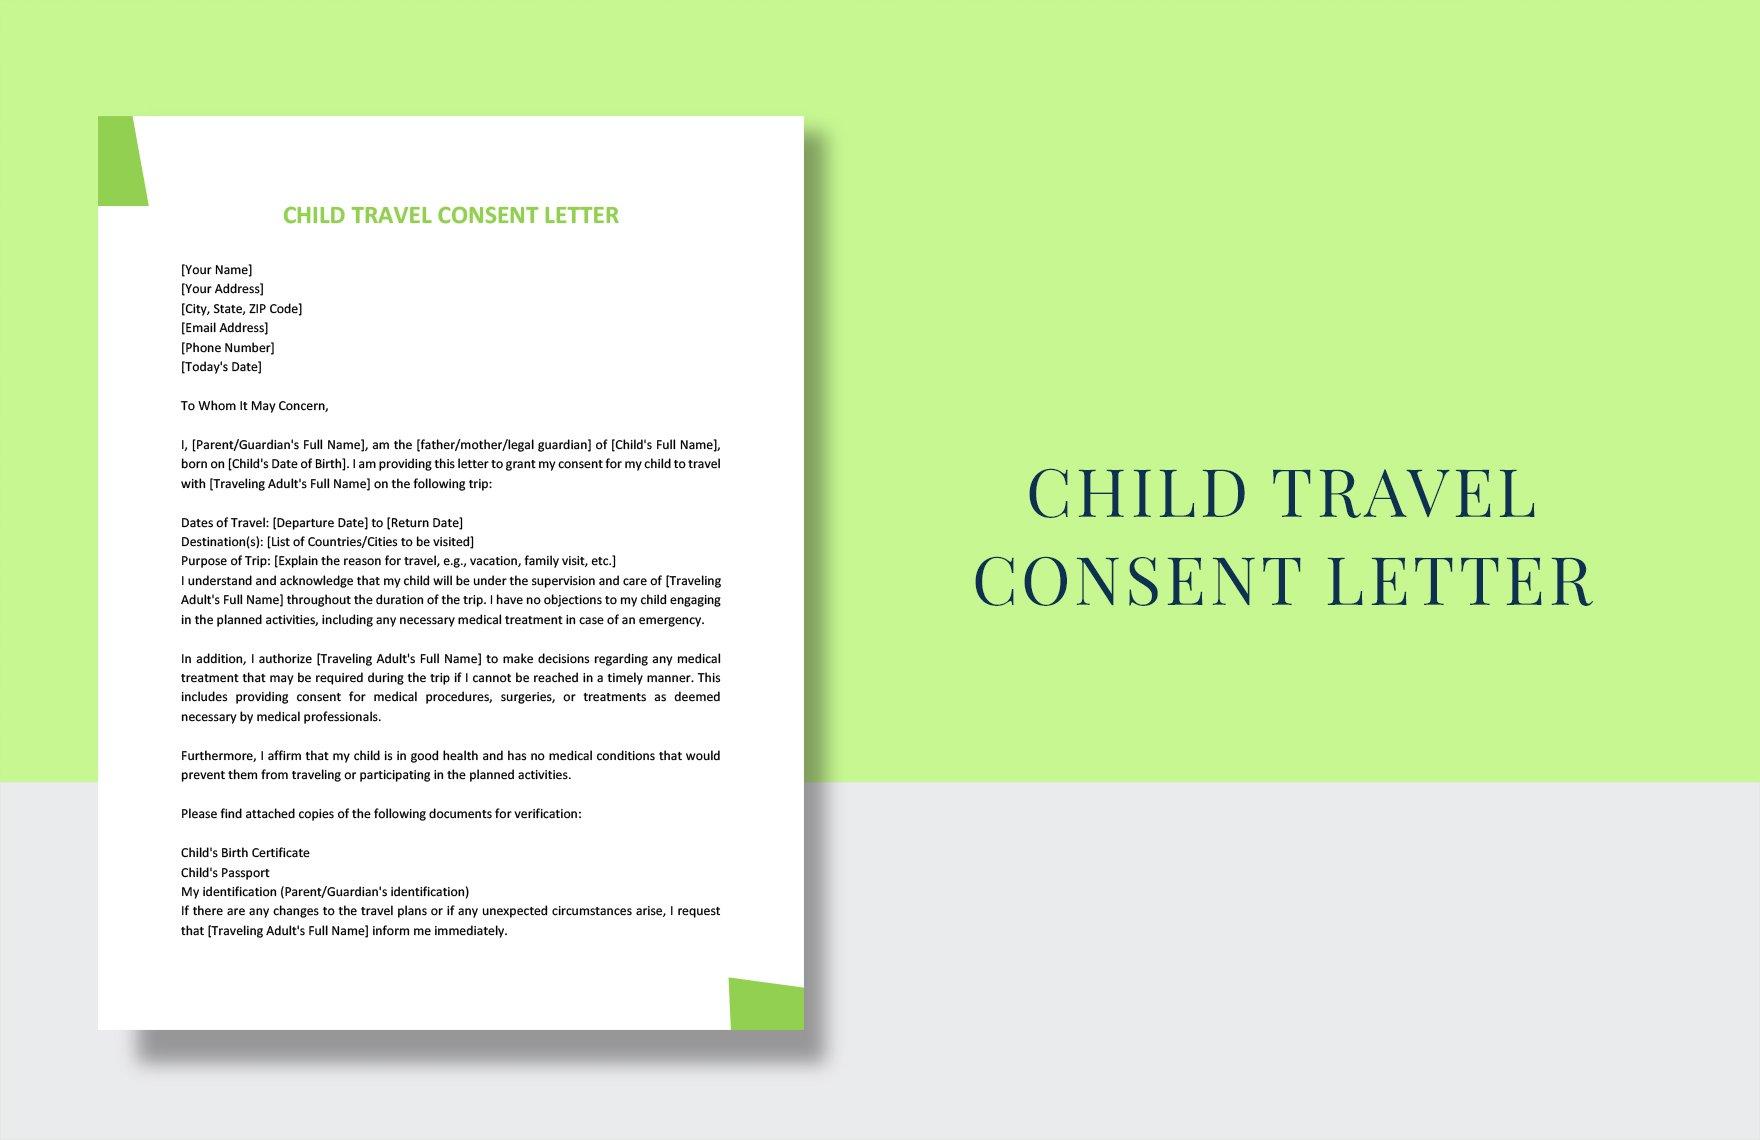 Child Travel Consent Letter